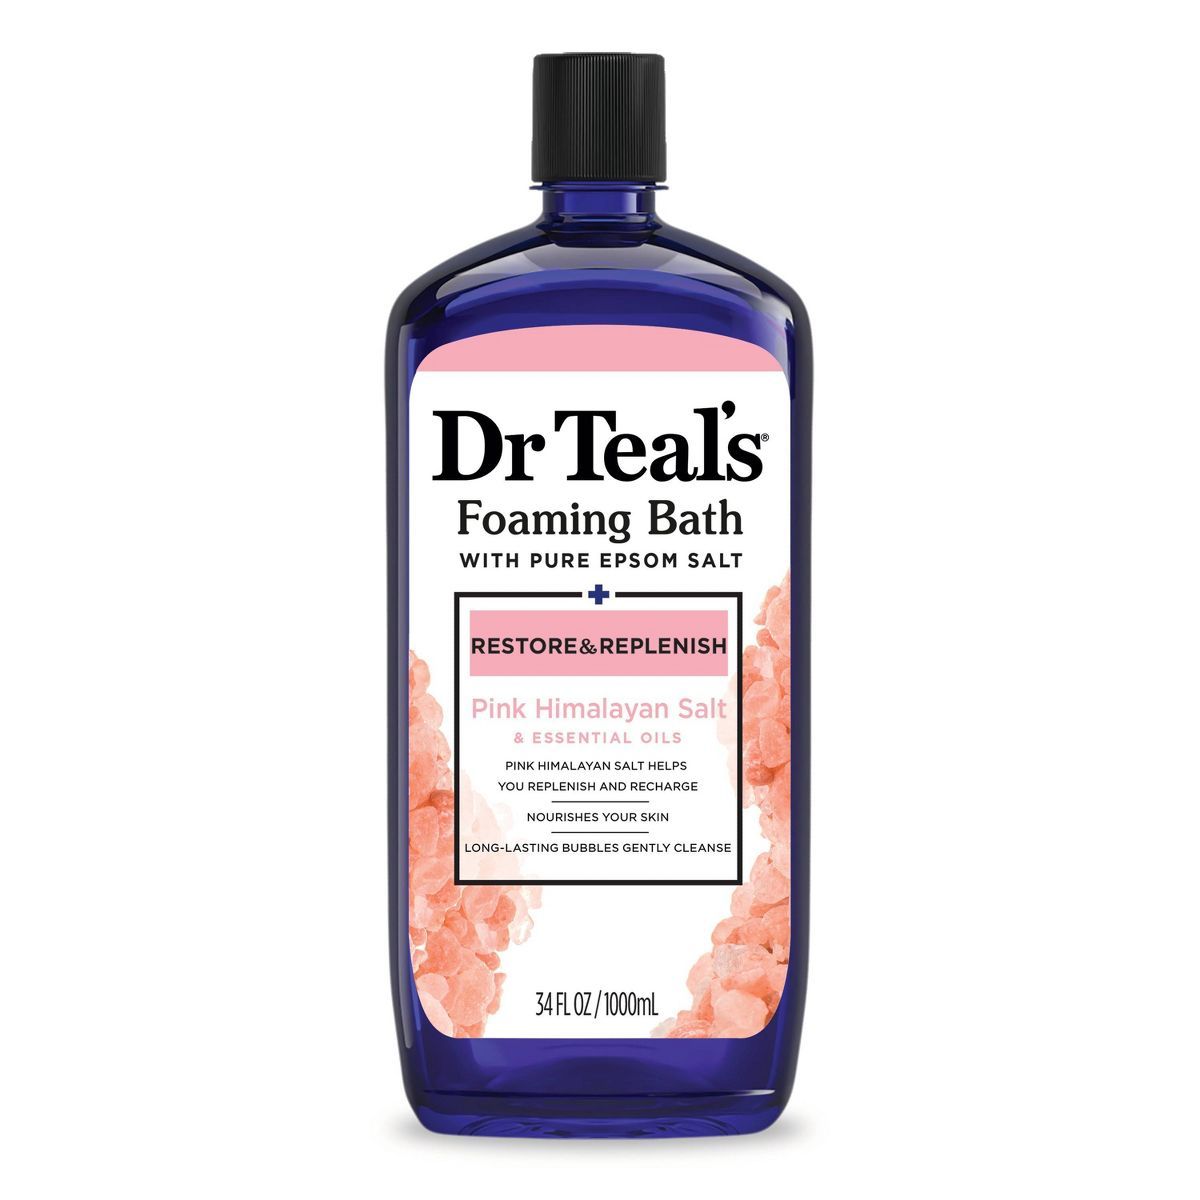 Dr Teal's Restore & Replenish Pink Himalayan Orange Foaming Bubble Bath - 34 fl oz | Target